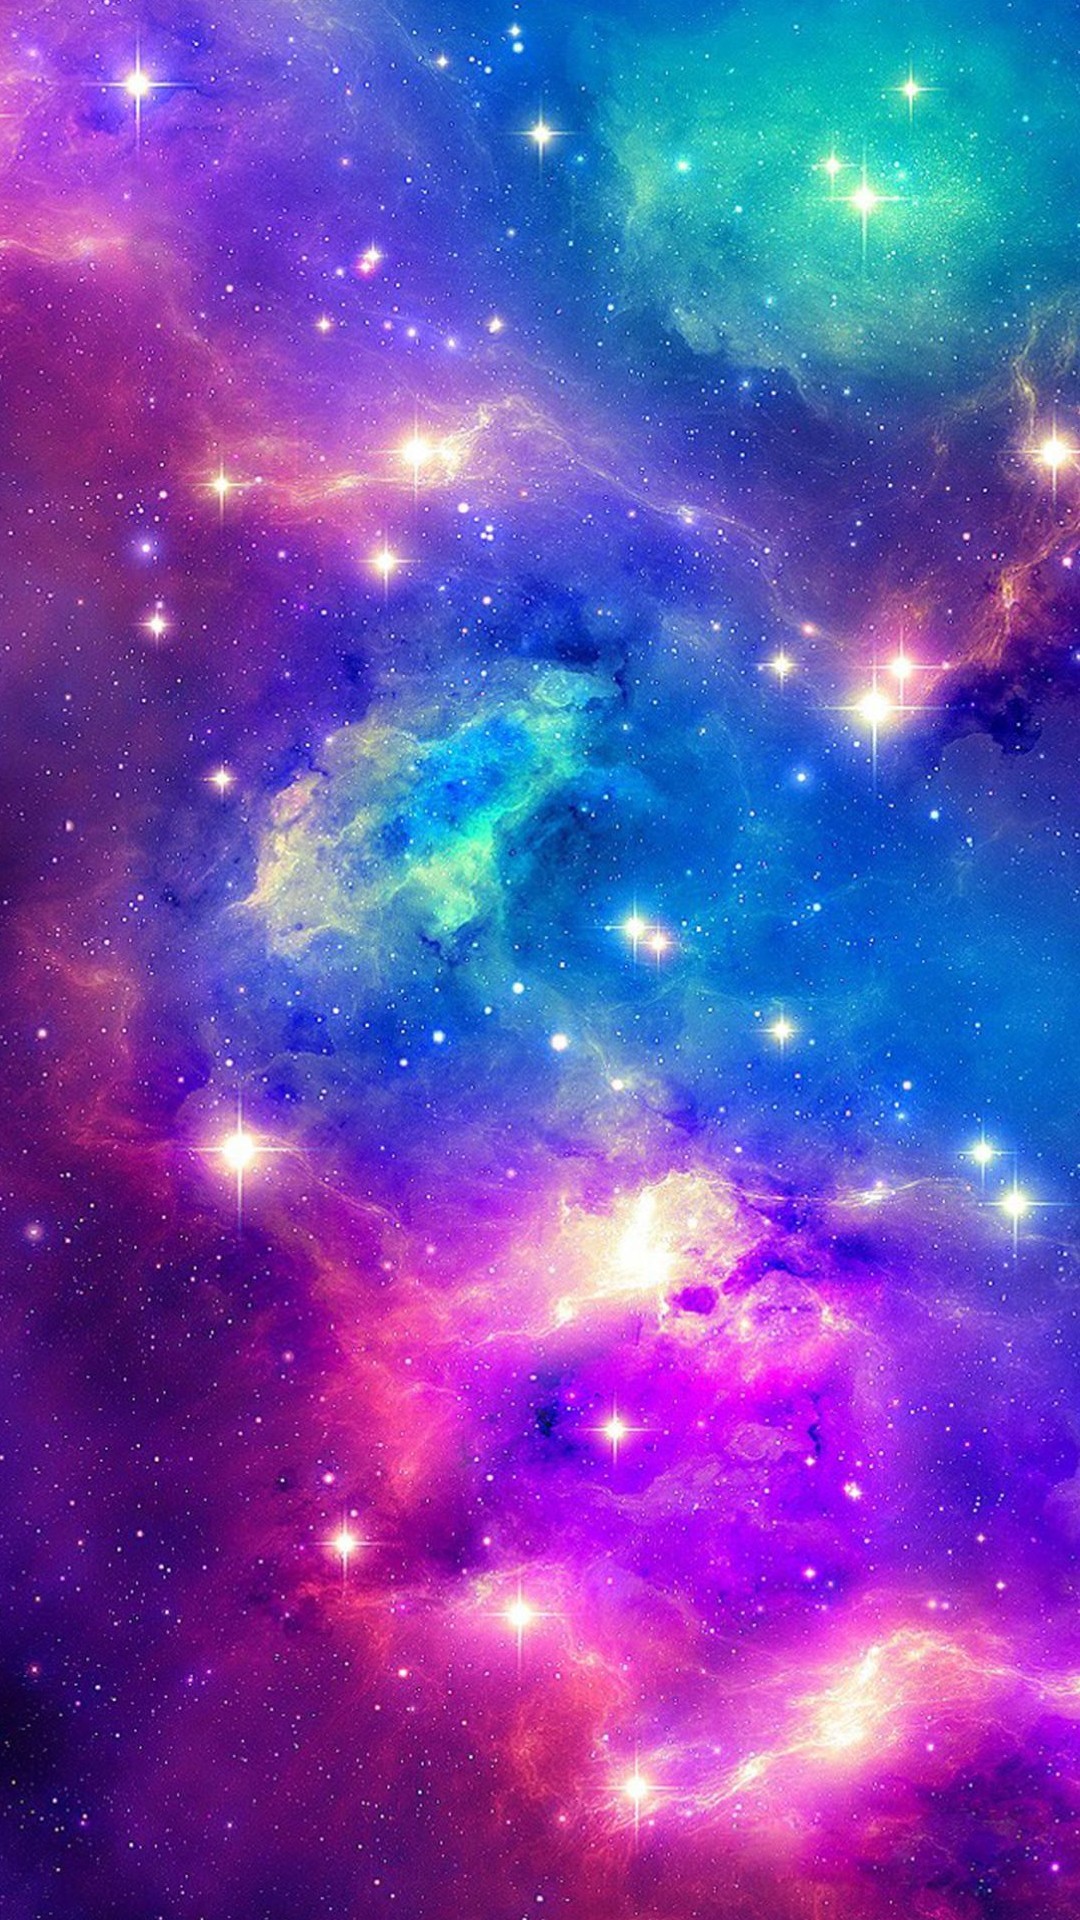  Galaxy  wallpaper Tumblr    Download free beautiful 